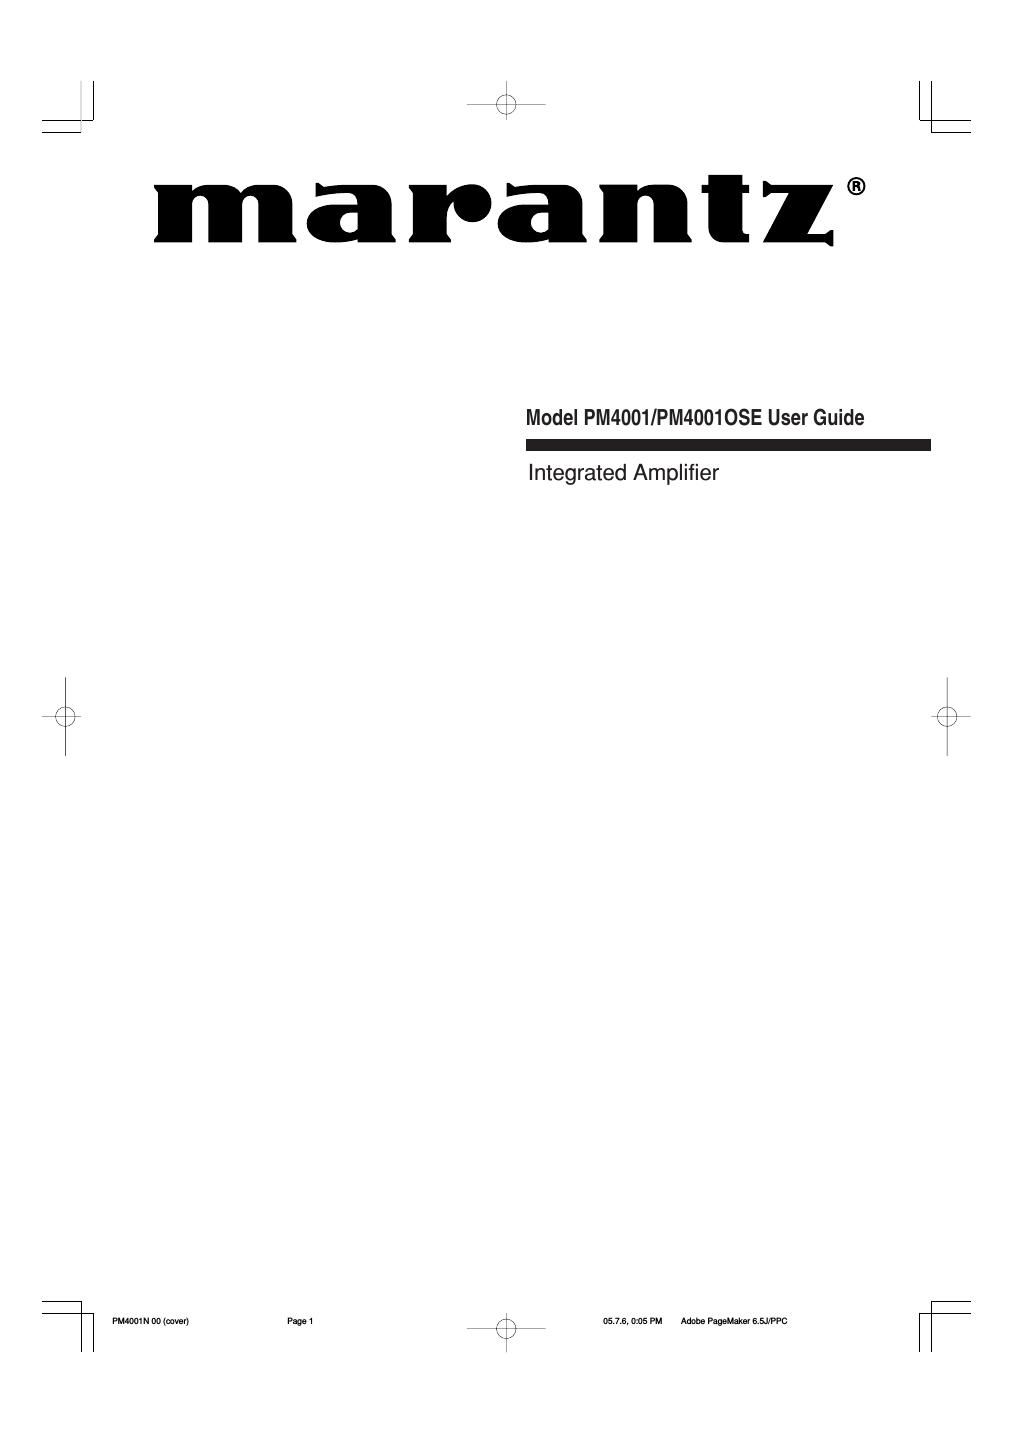 Marantz PM 4001 OSE Owners Manual